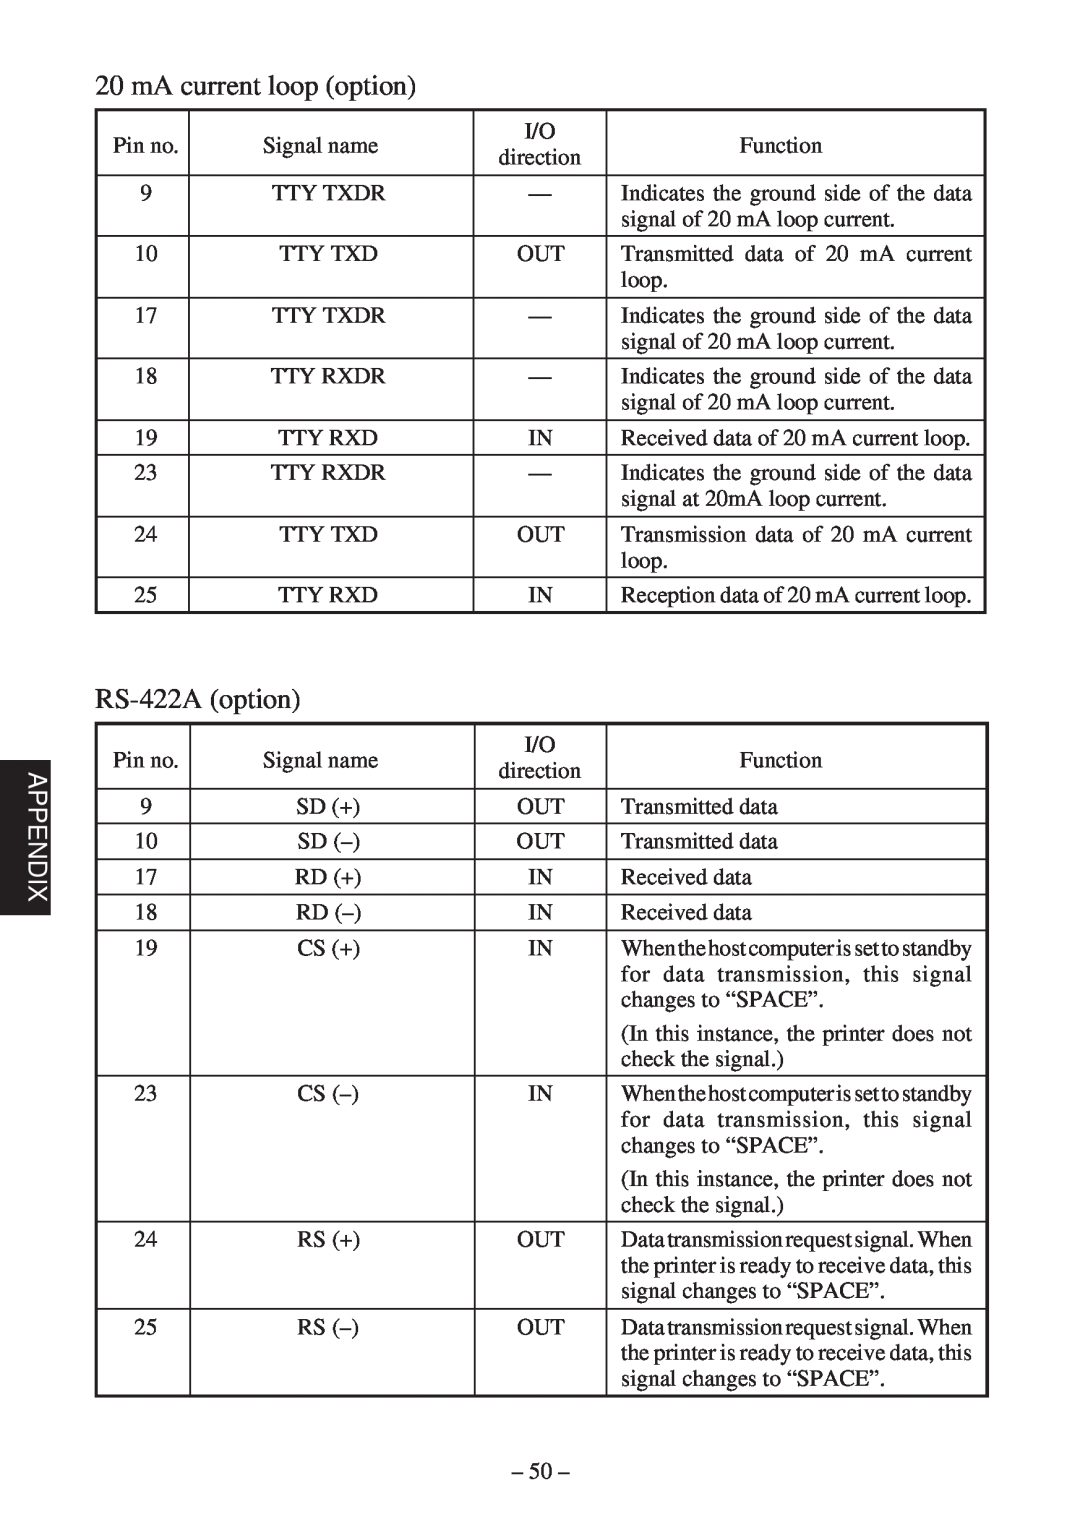 Star Micronics 347F user manual mA current loop option, RS-422A option, Appendix 